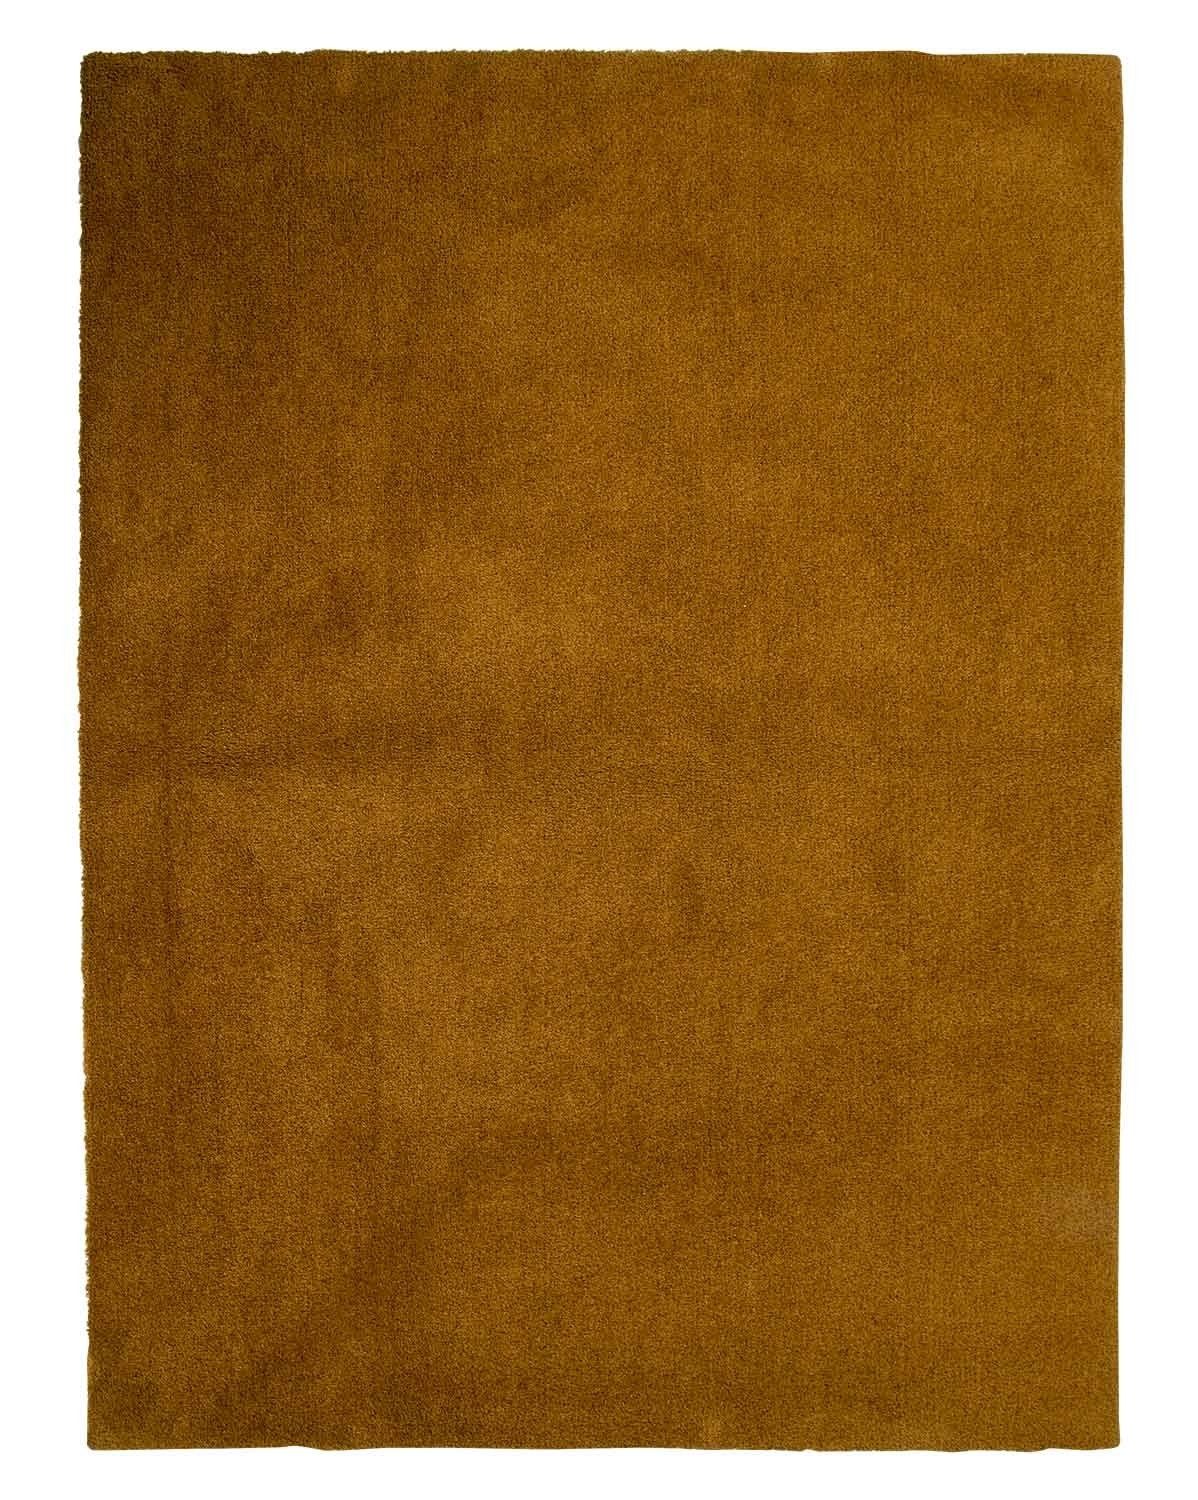 Teppich FEEL COSY, Polyester, Senffarben, 60 x 115 cm, Balta Rugs, rechteckig, Höhe: 11 mm